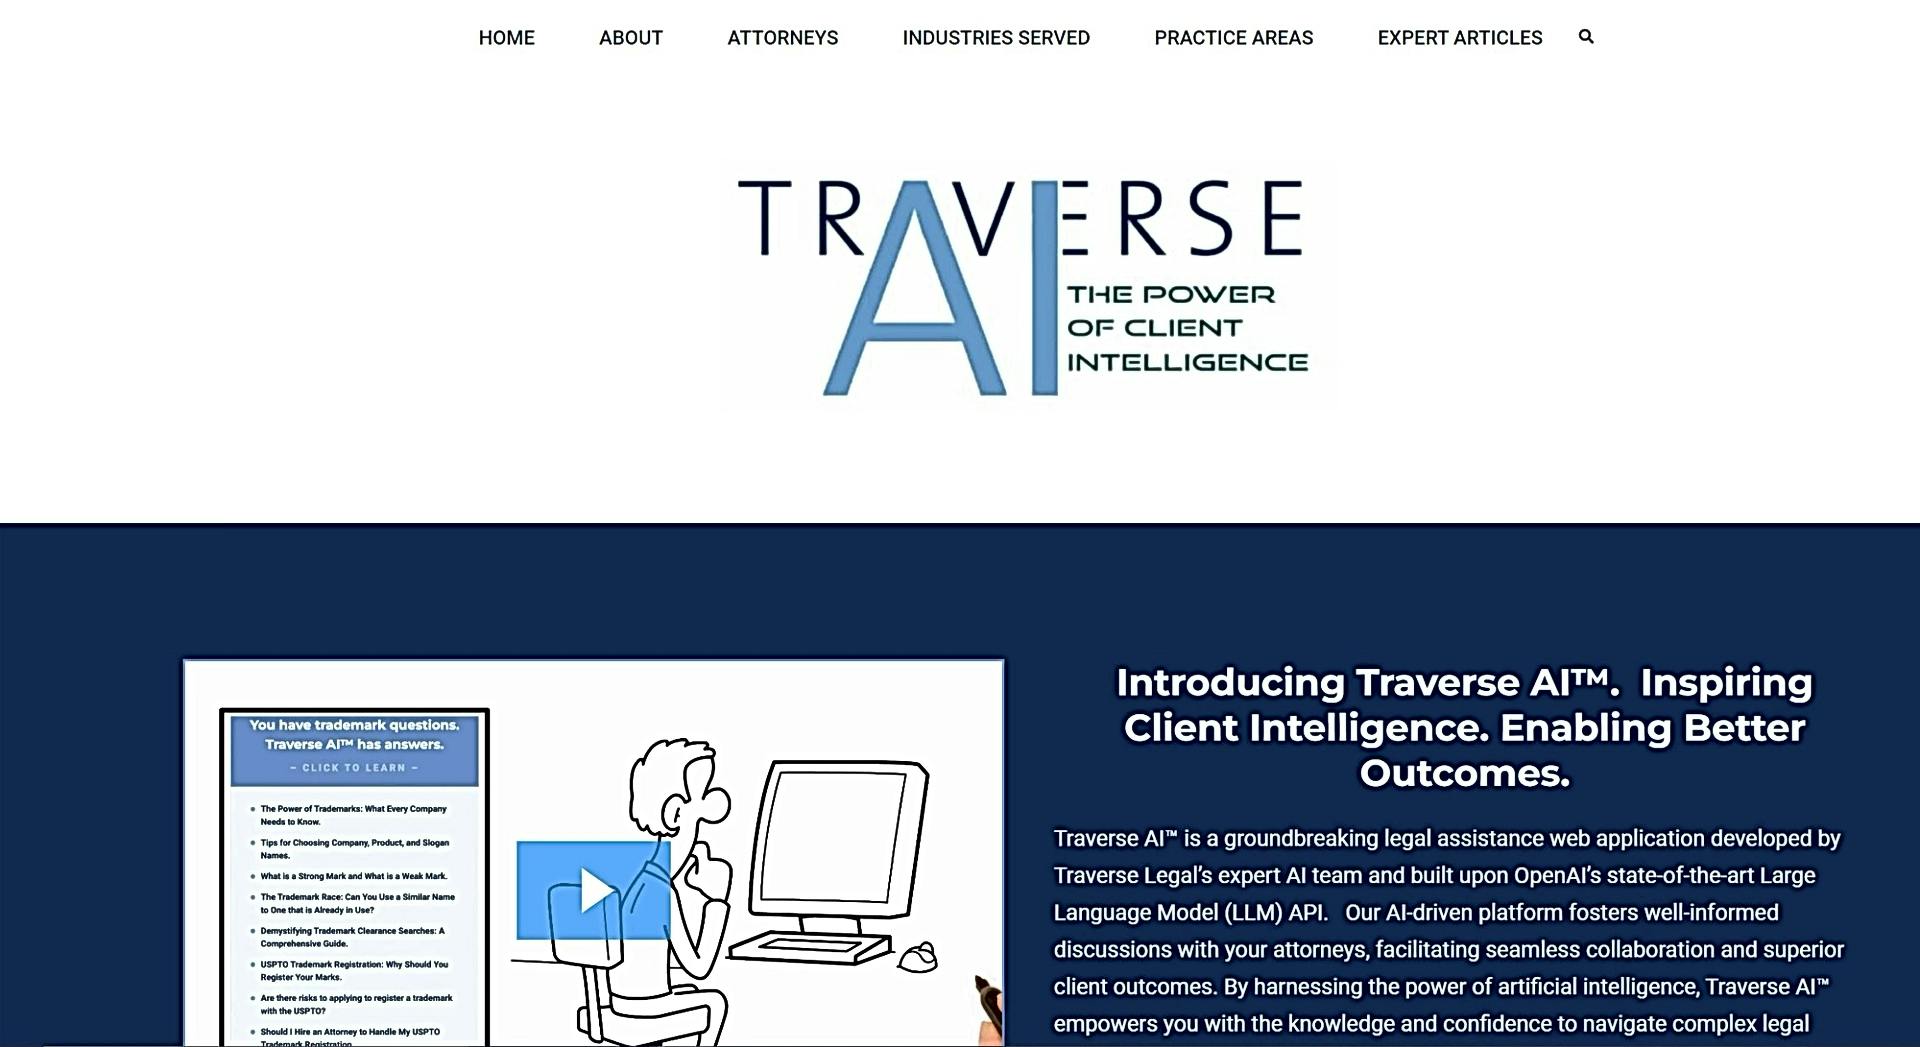 Traverse AI™ featured